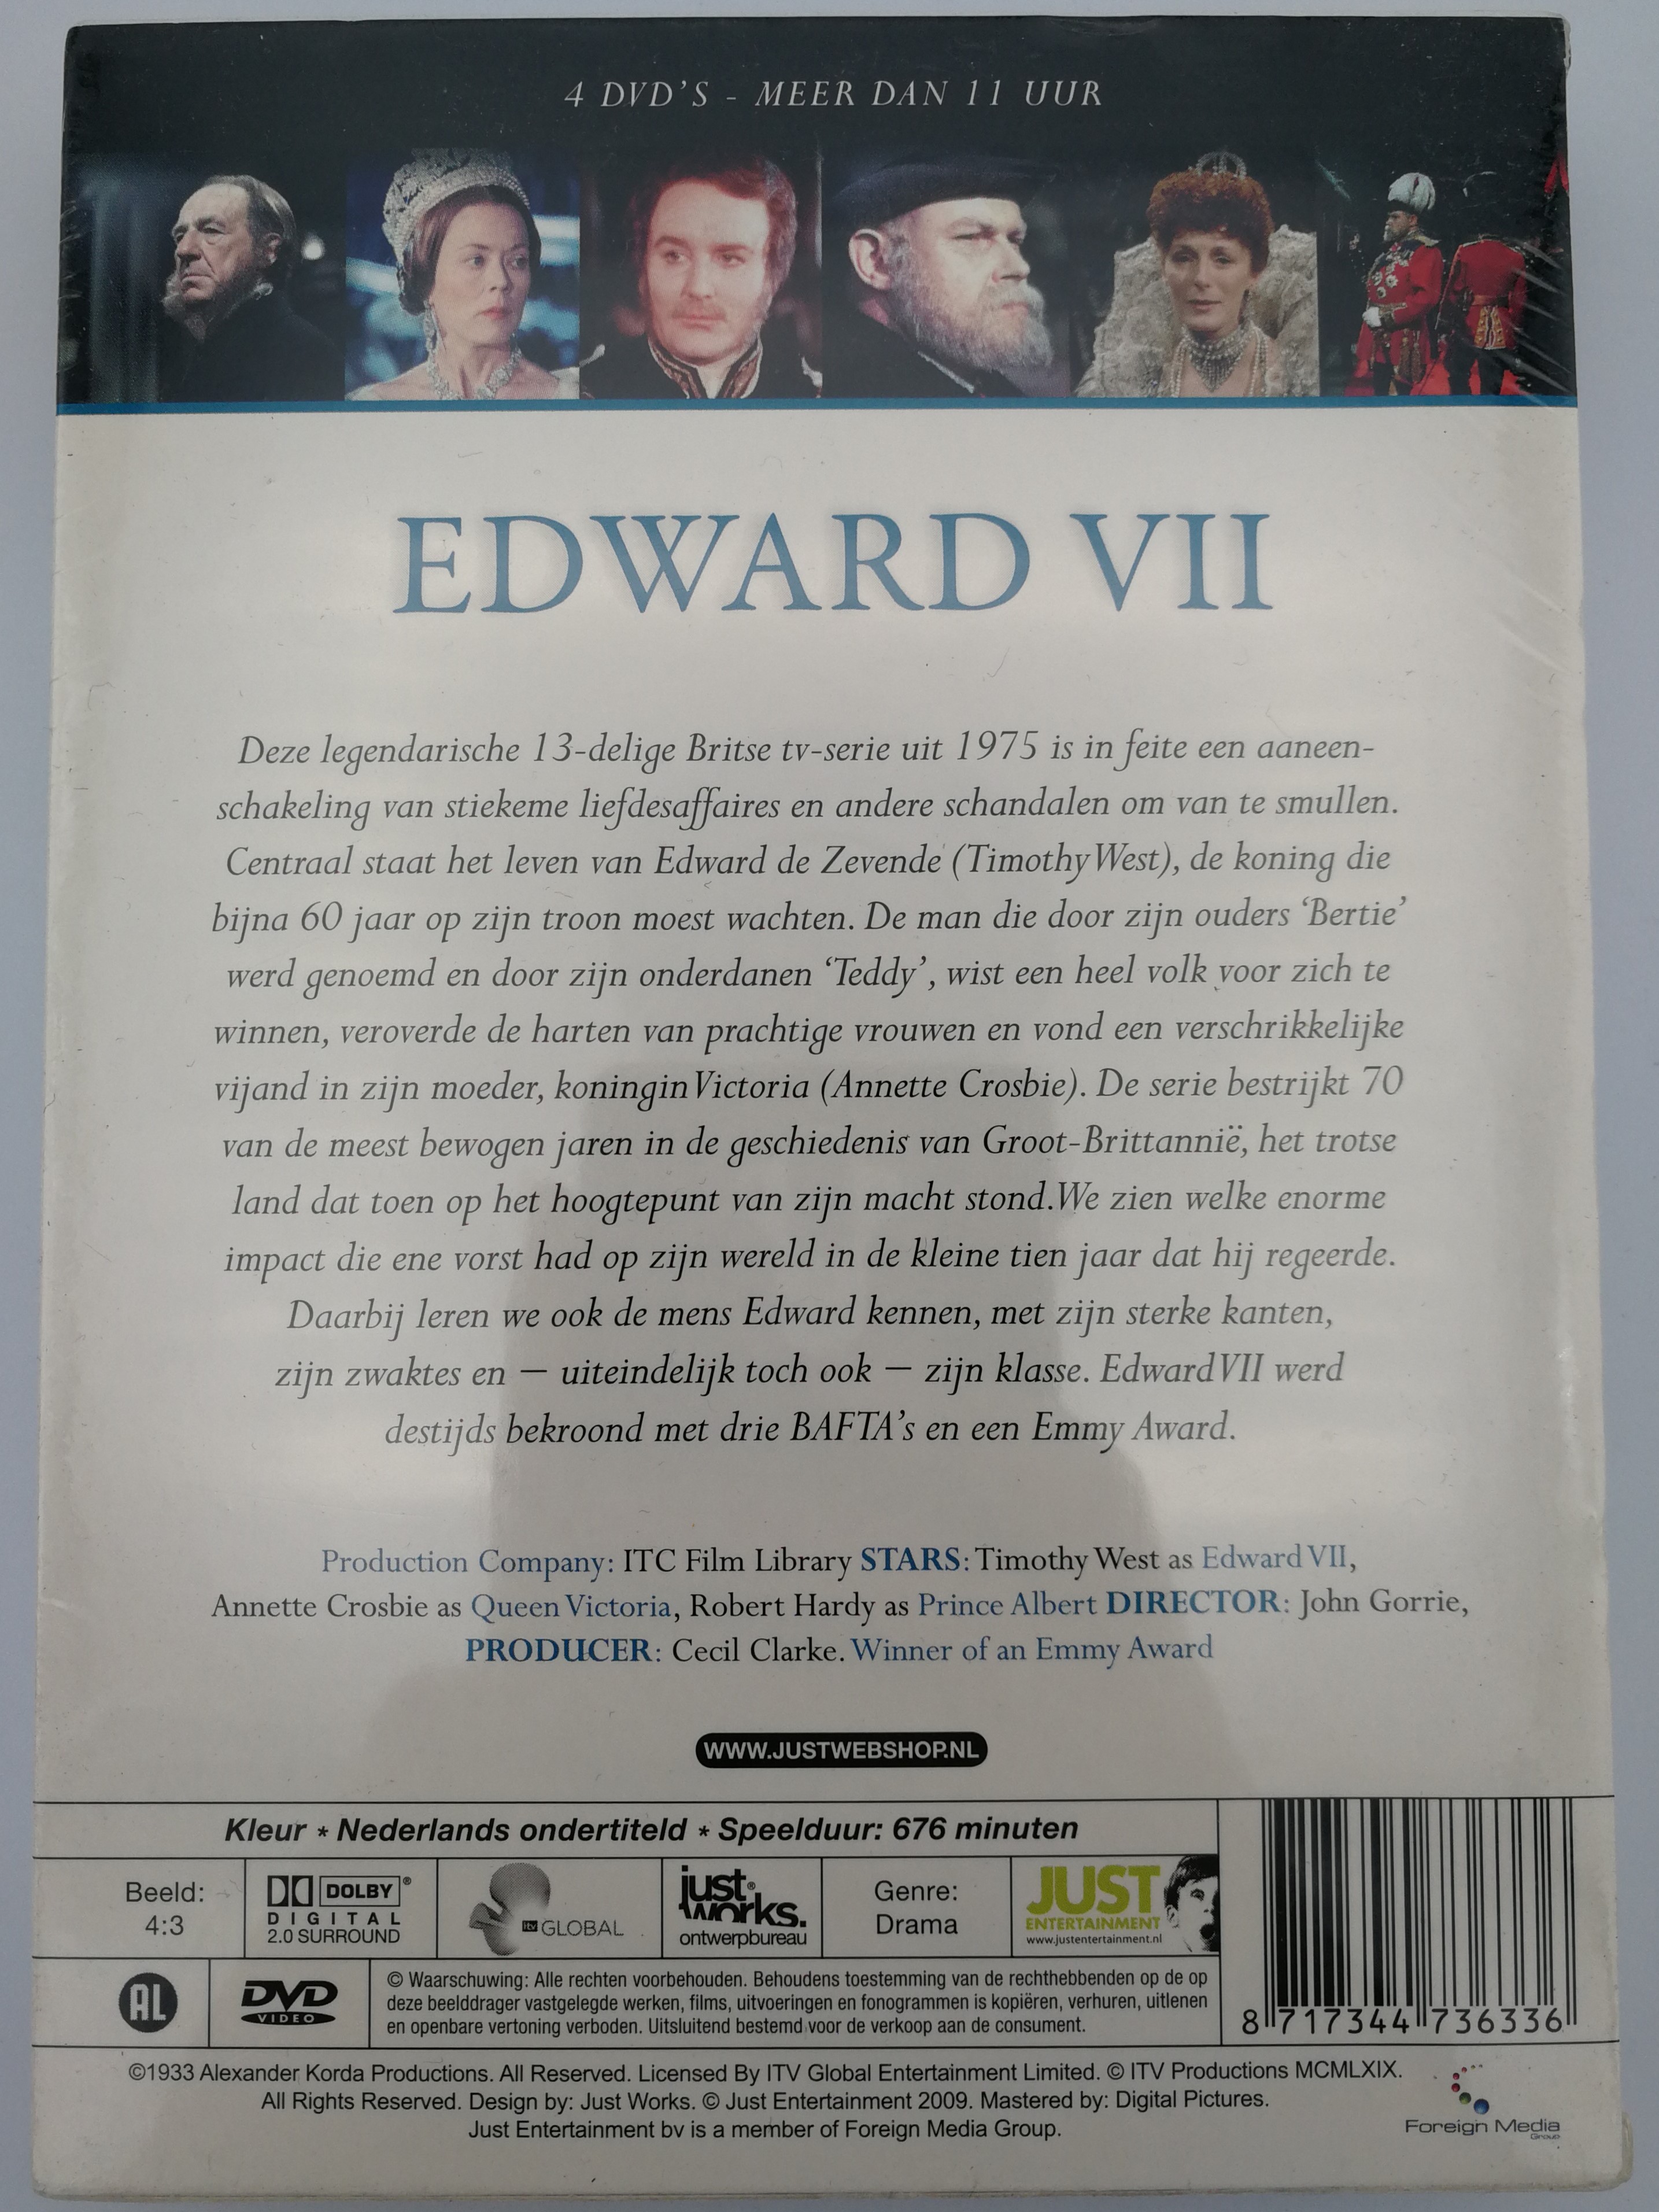 Edward VII 4 DVD Box 1979 Edwad the Seventh TV Series  1